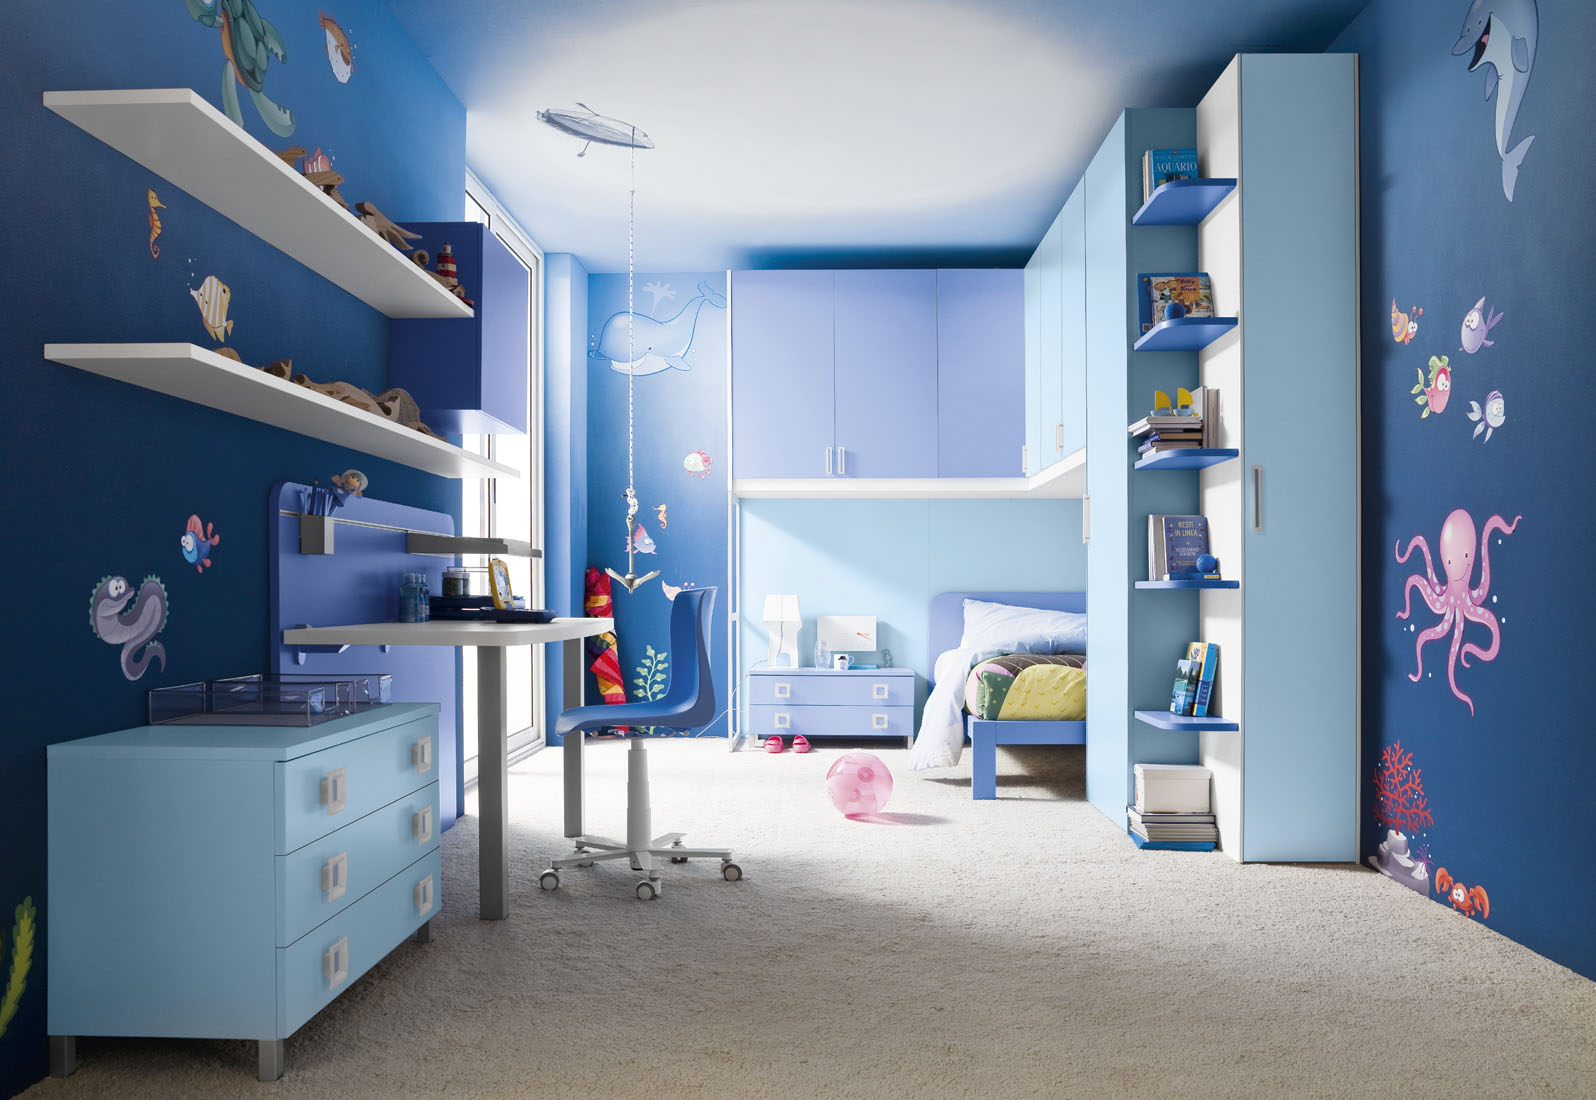 20 Blue Boys Room Ideas - Decorate It Like a Pro - Live Enhanced